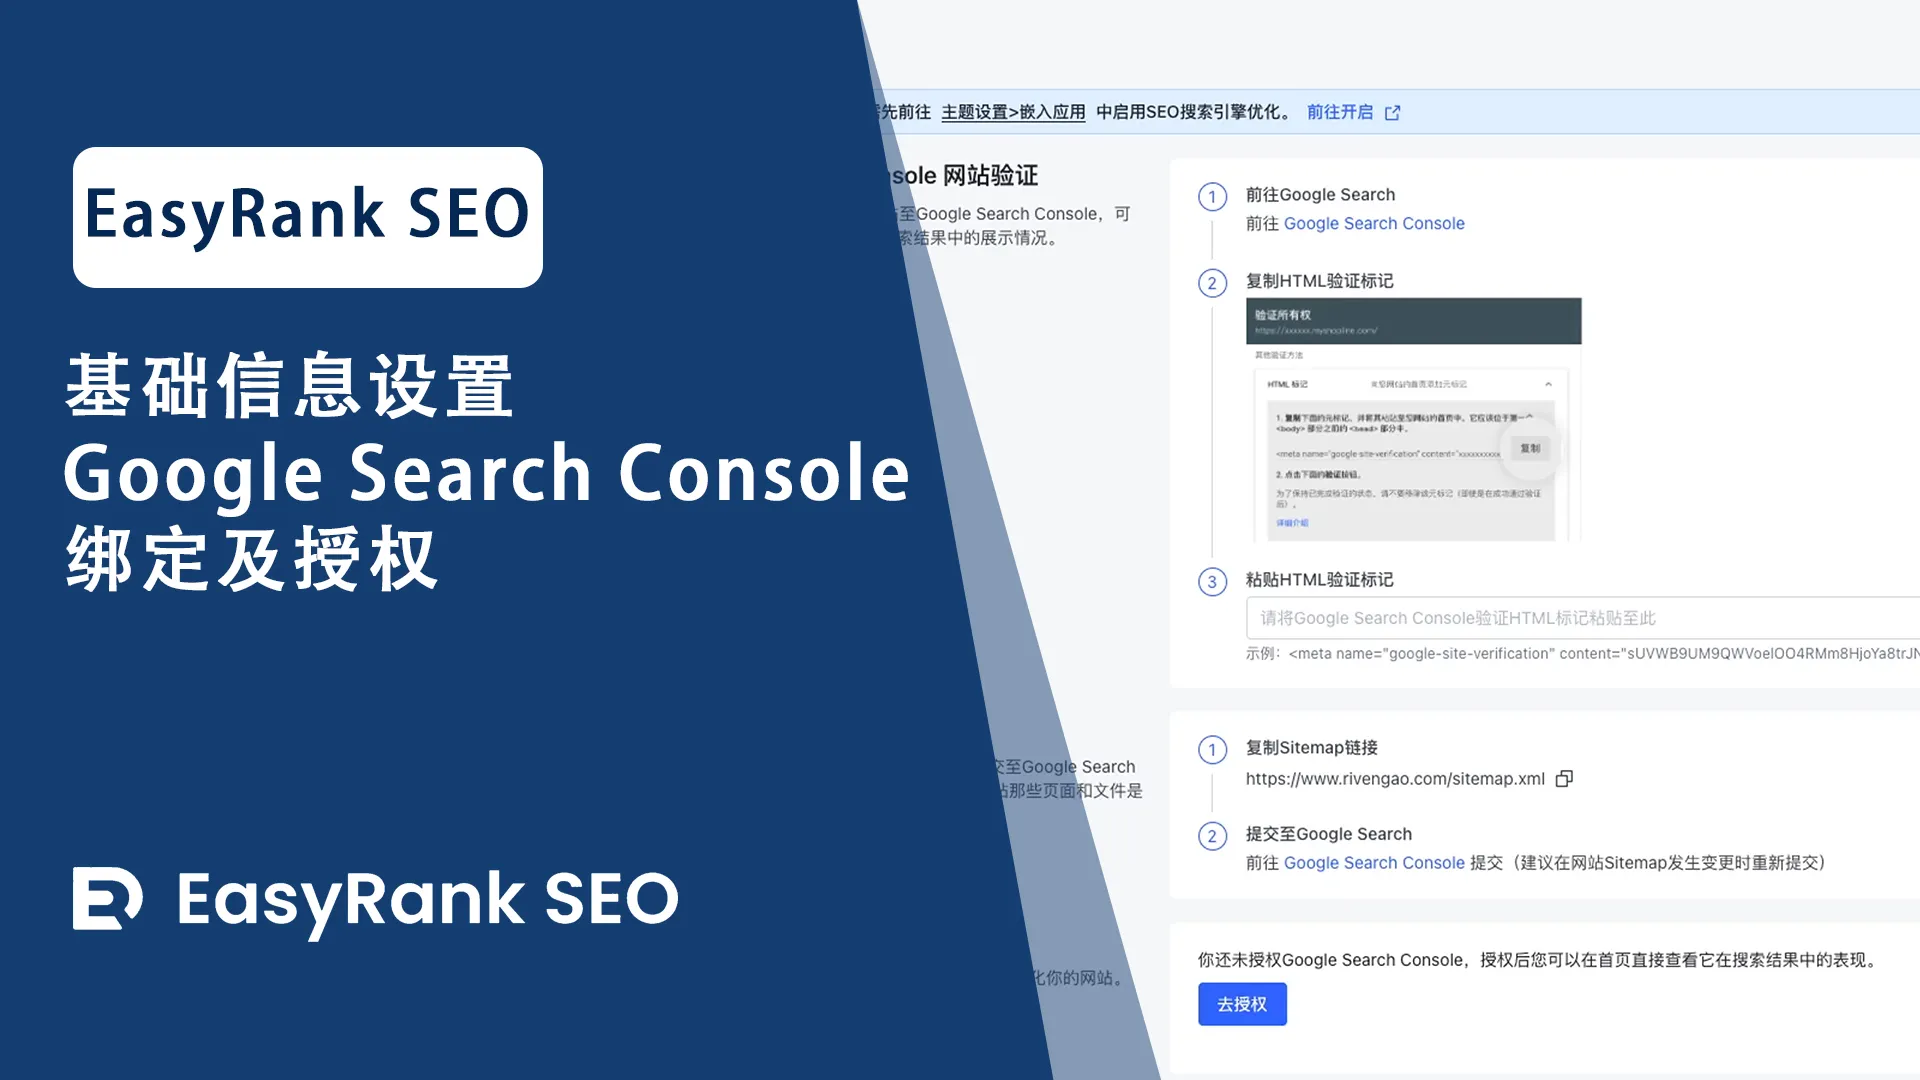 SHOPLINE_EasyRank SEO之基础信息设置Google Search Console绑定及授权配图